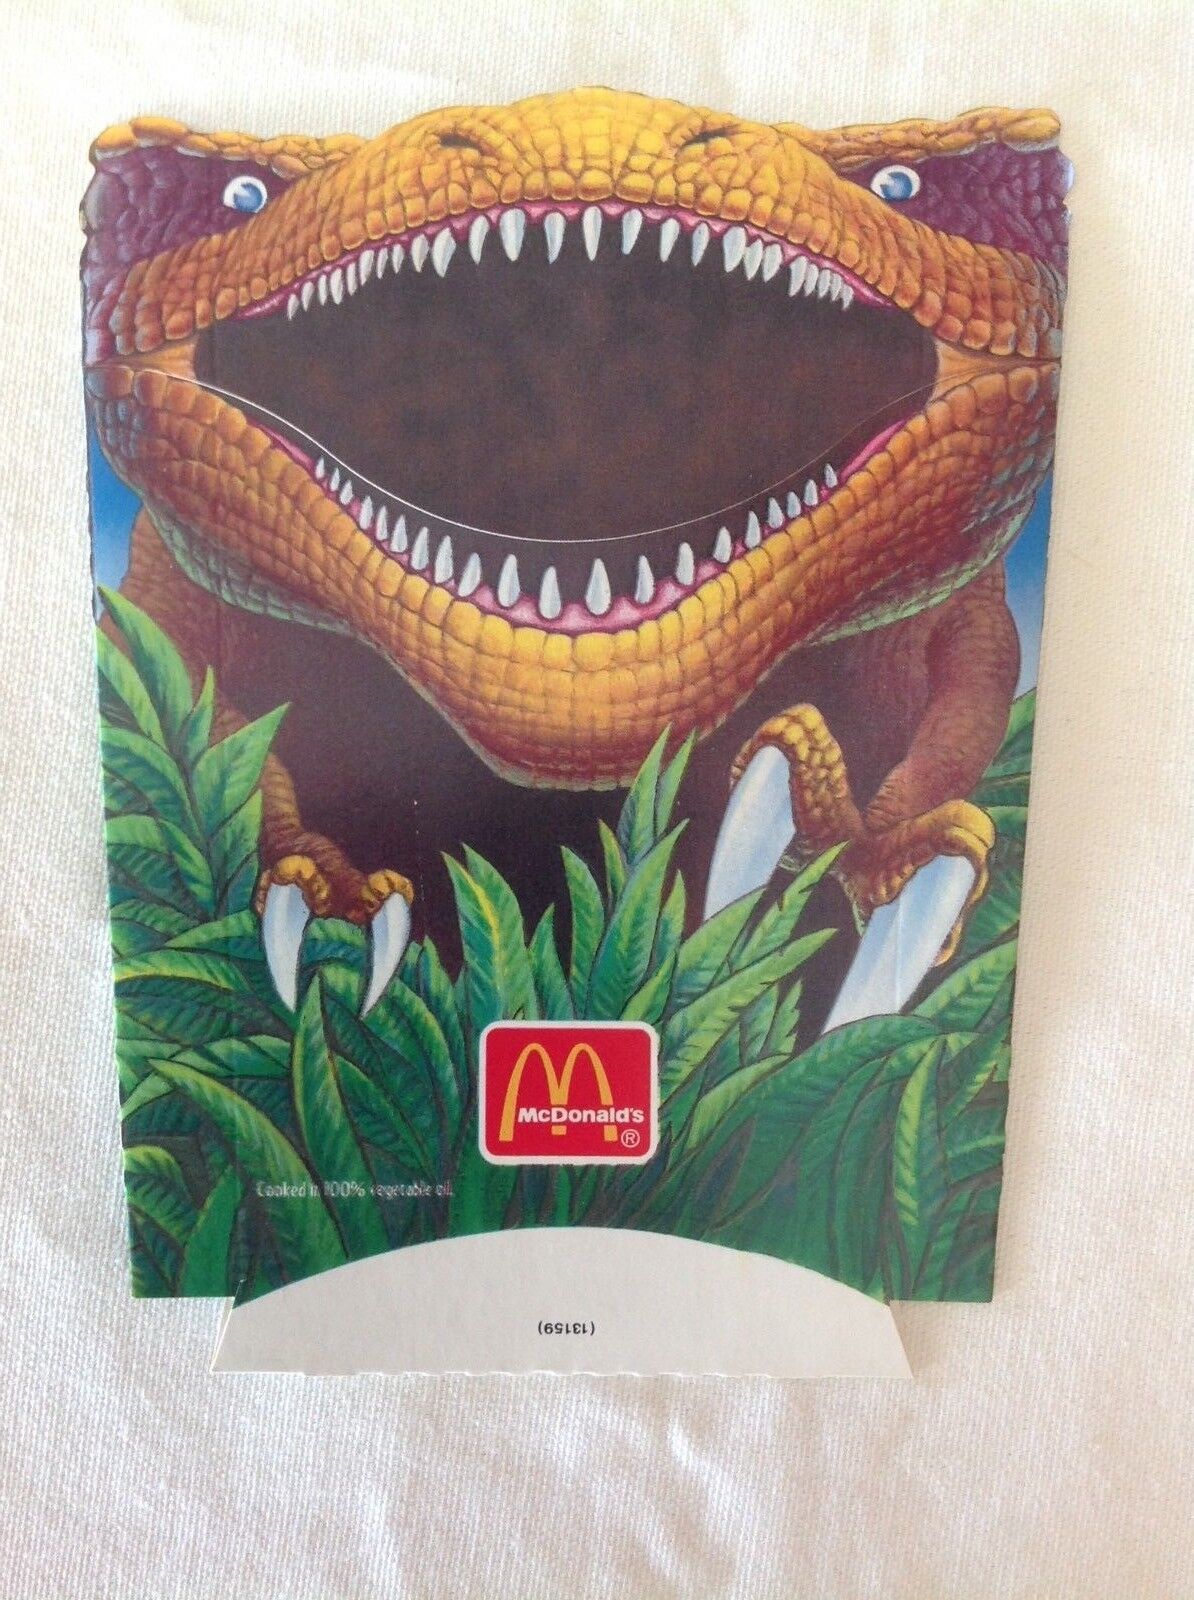 MINT CONDITION, McDonald's Jurassic Park, The Visitors Center, Fry Box - NEW!! McDonald's - фотография #2